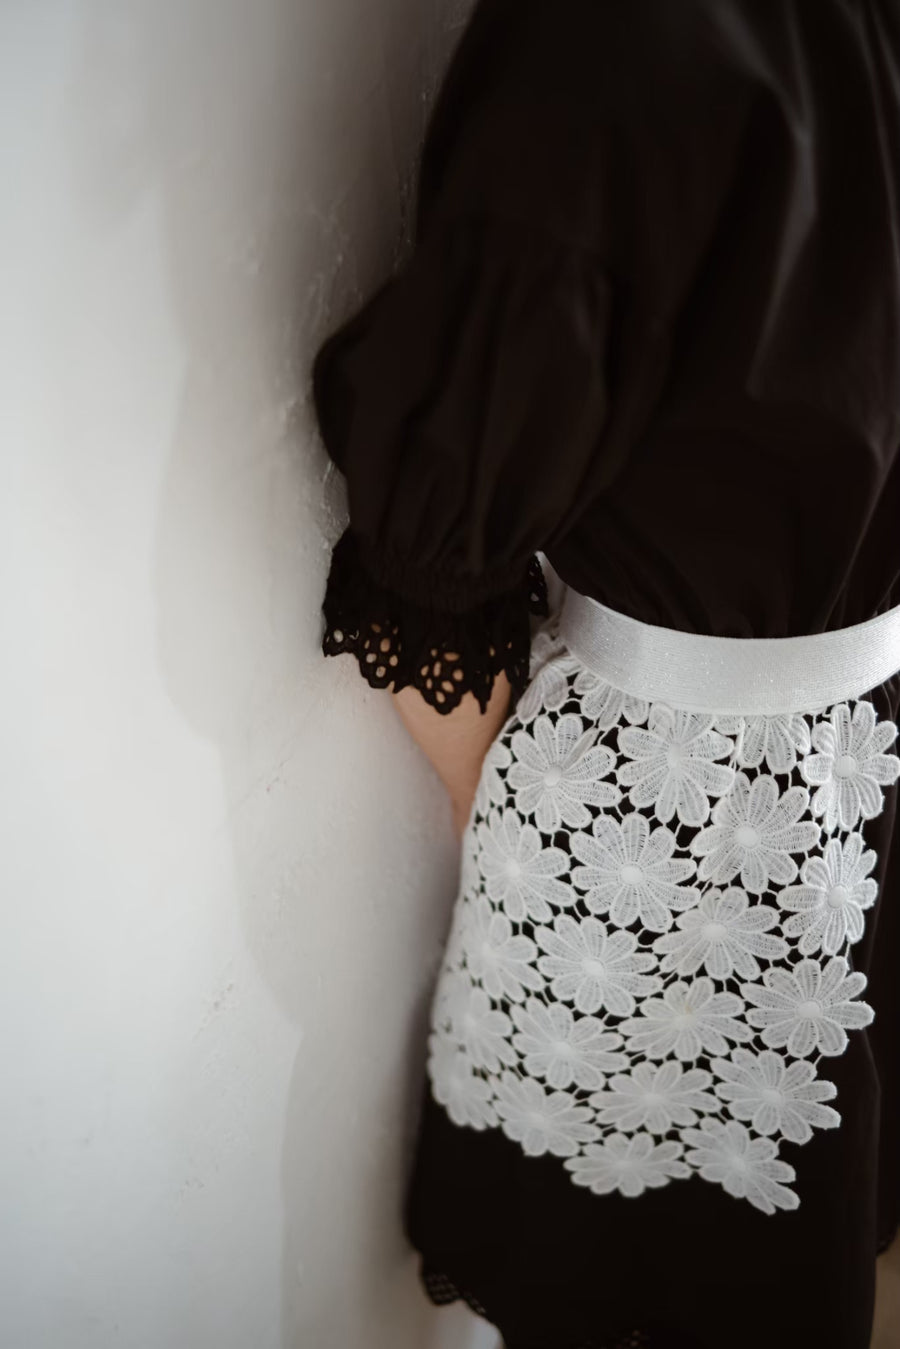 Lace apron dress/black